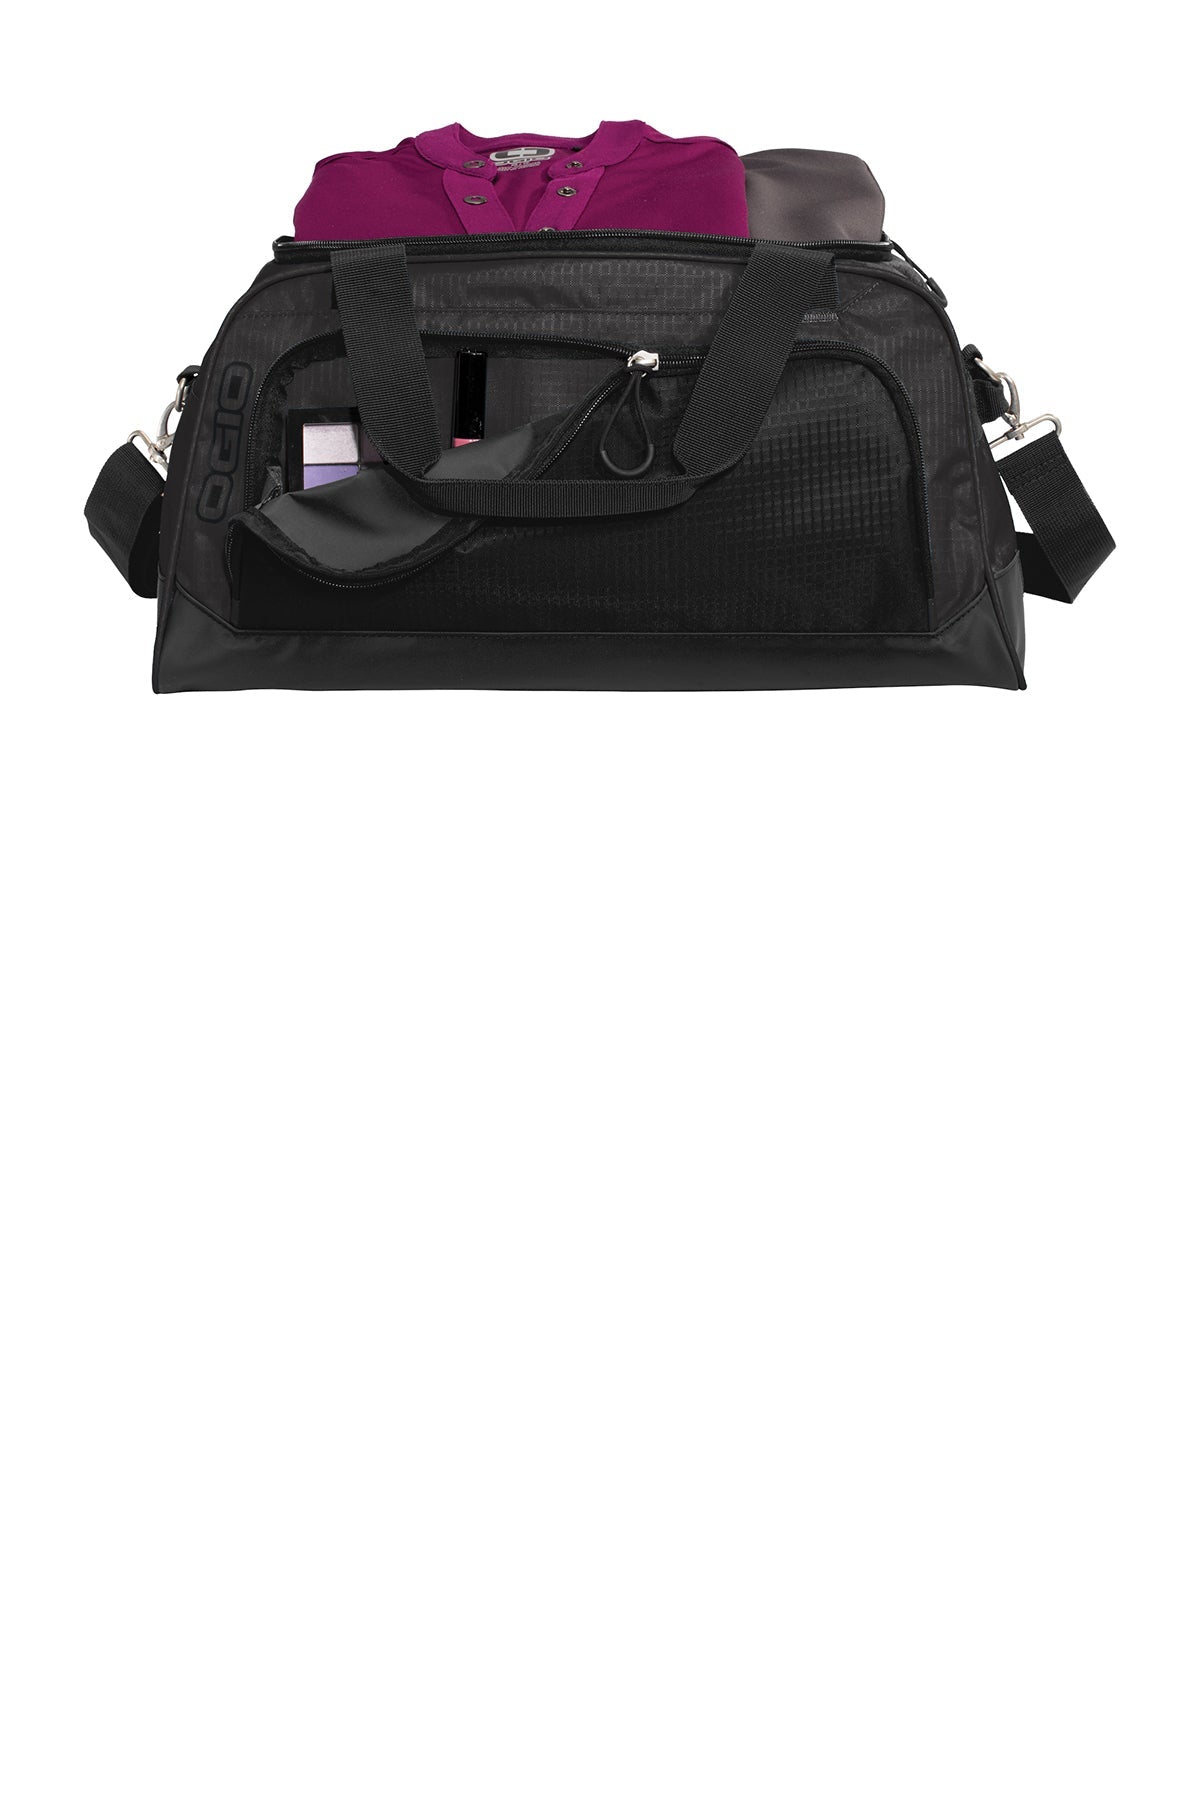 OGIO Breakaway Customized Duffel Bags, Gear Grey